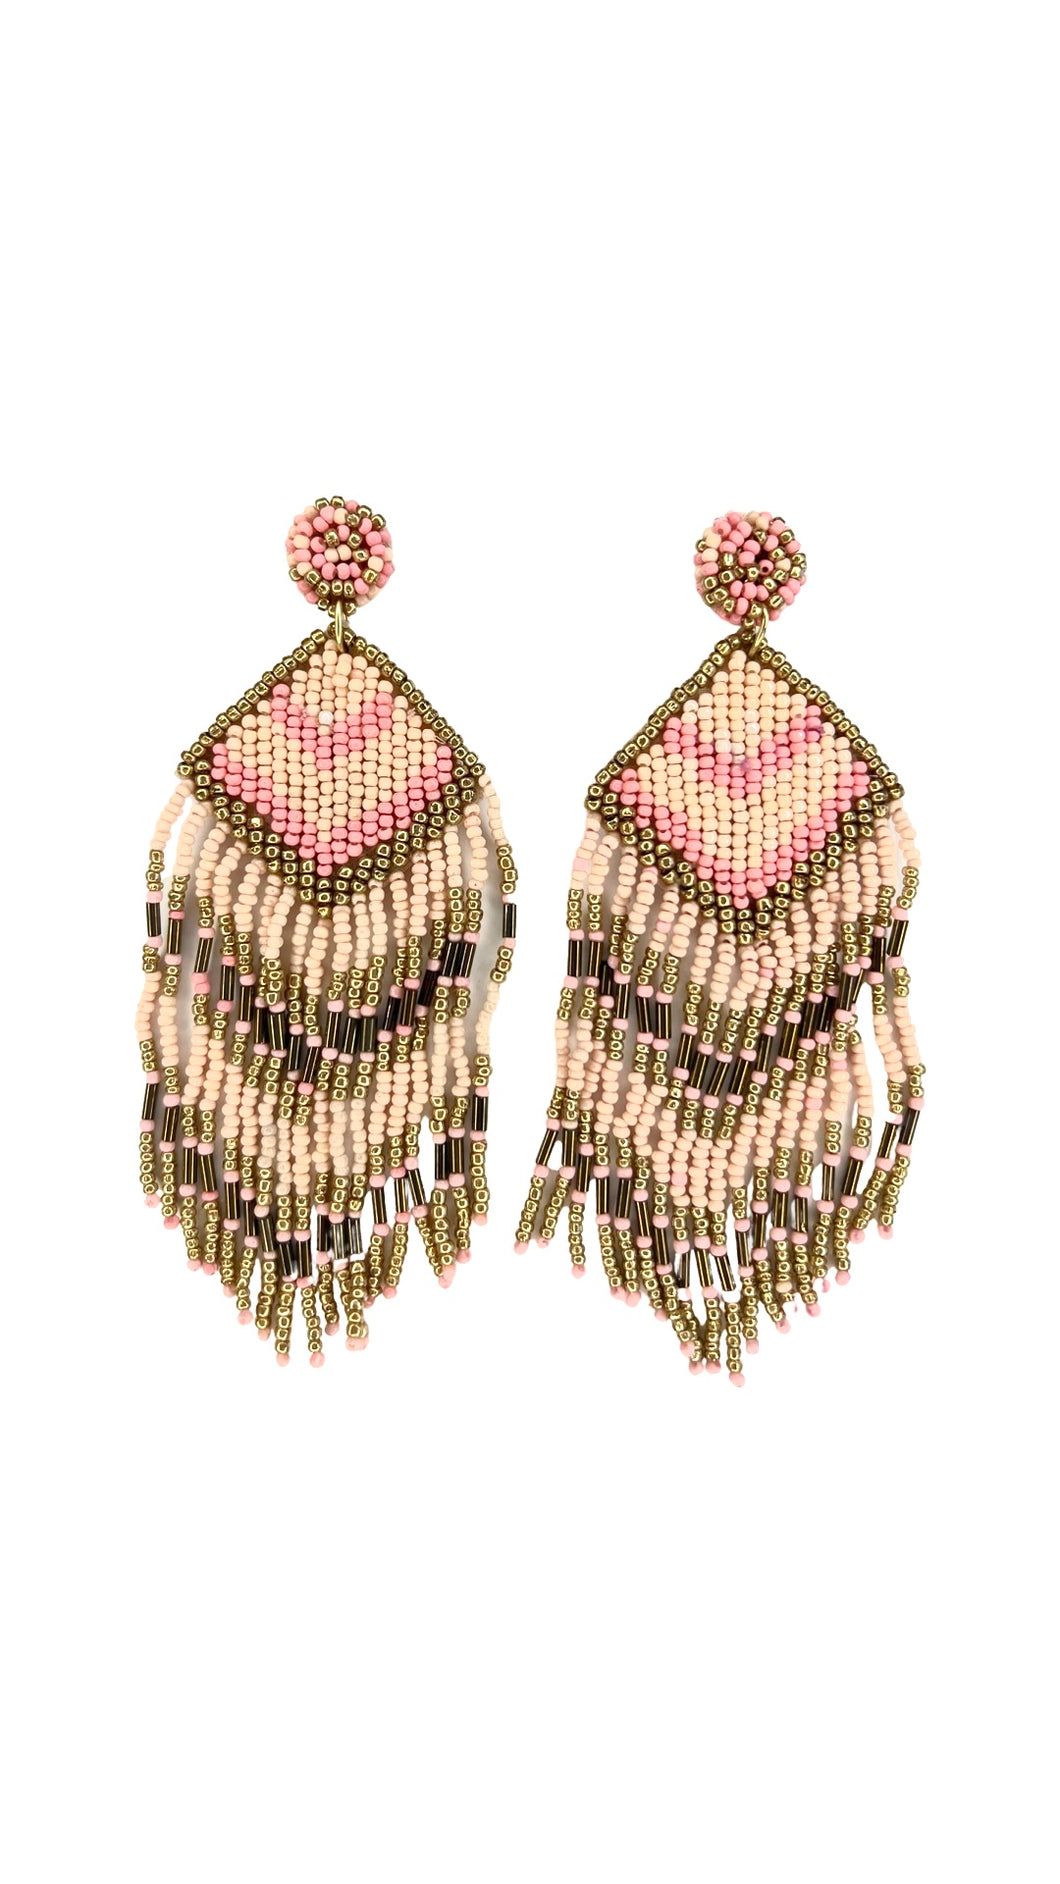 Pink & gold beaded earrings